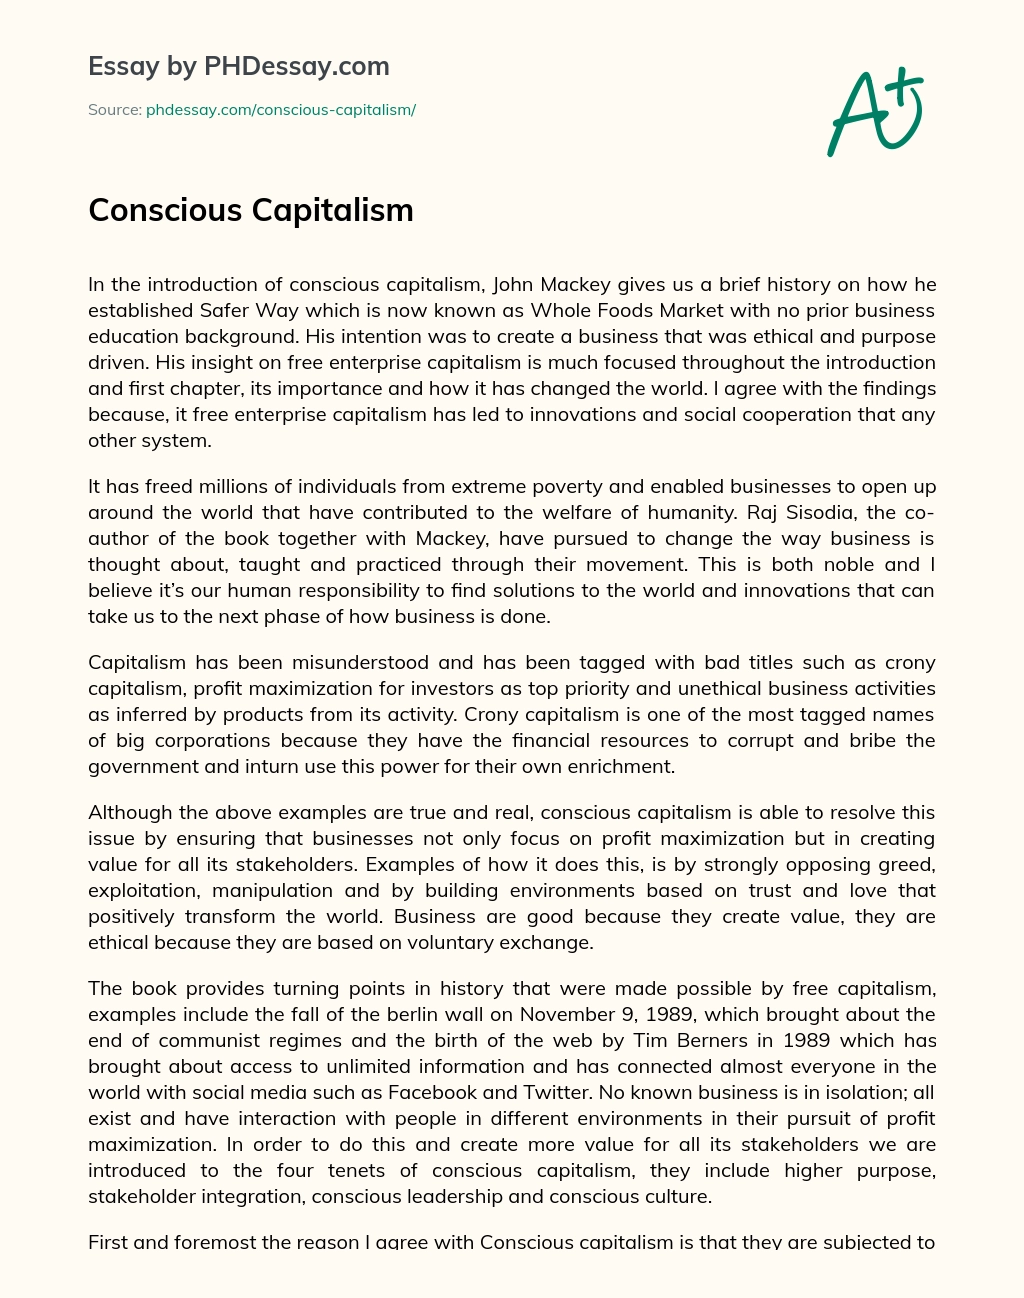 Conscious Capitalism essay